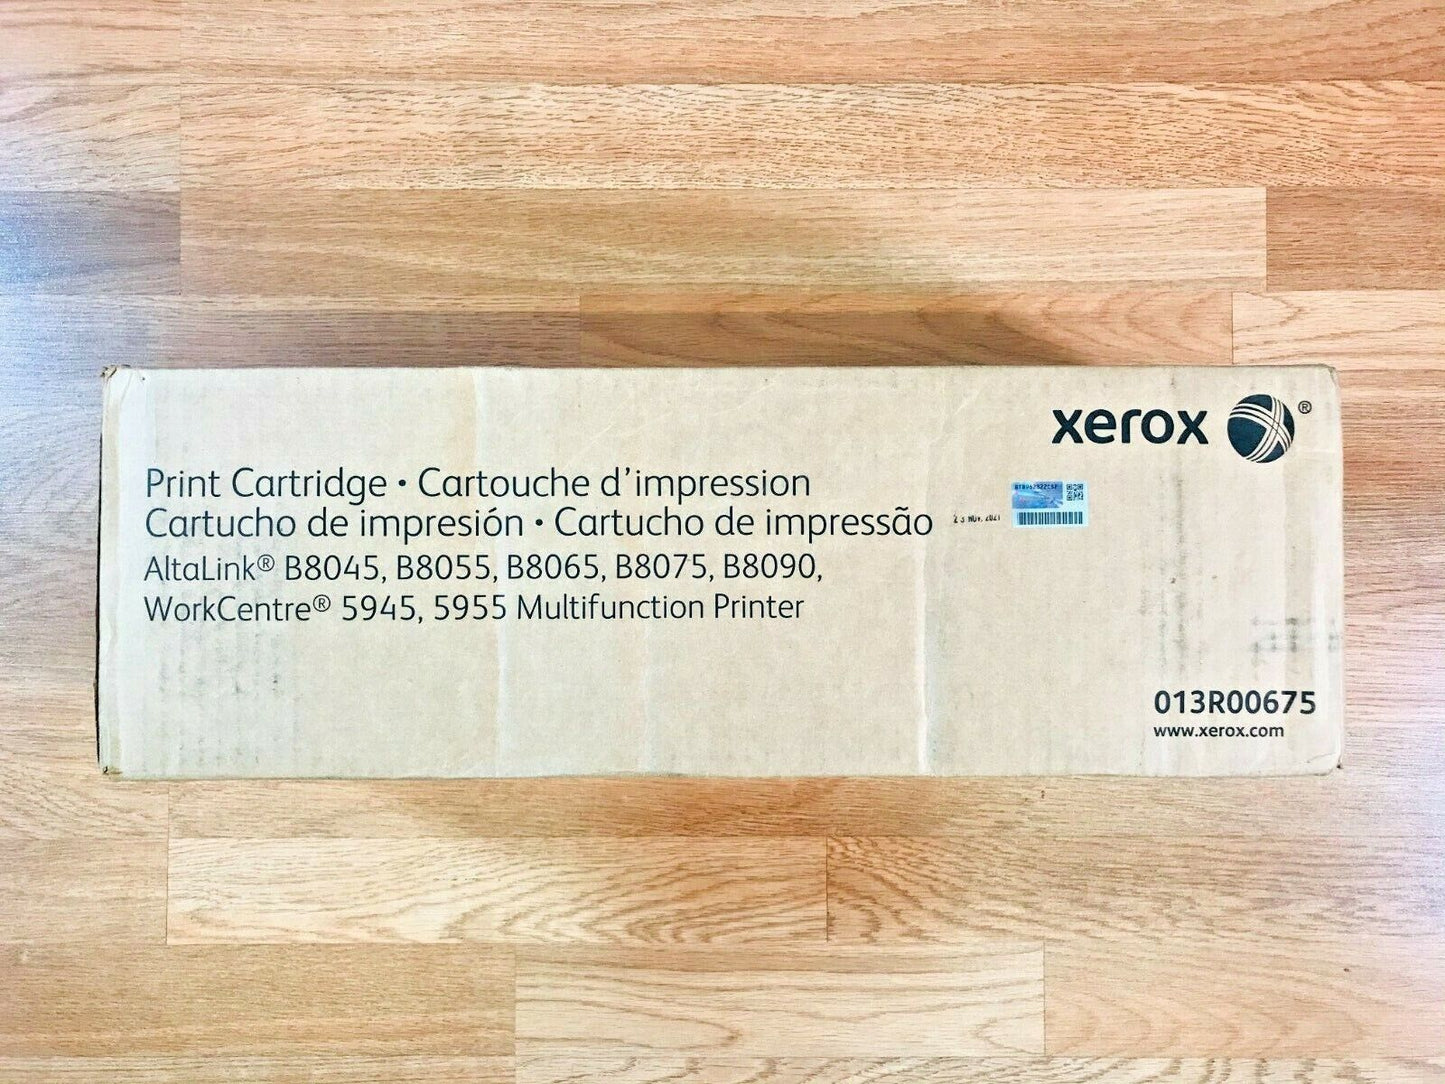 Xerox Print Cartridge 013R00675 For AltaLink -B8045, B8055 Toner Same Day Ship!! - copier-clearance-center